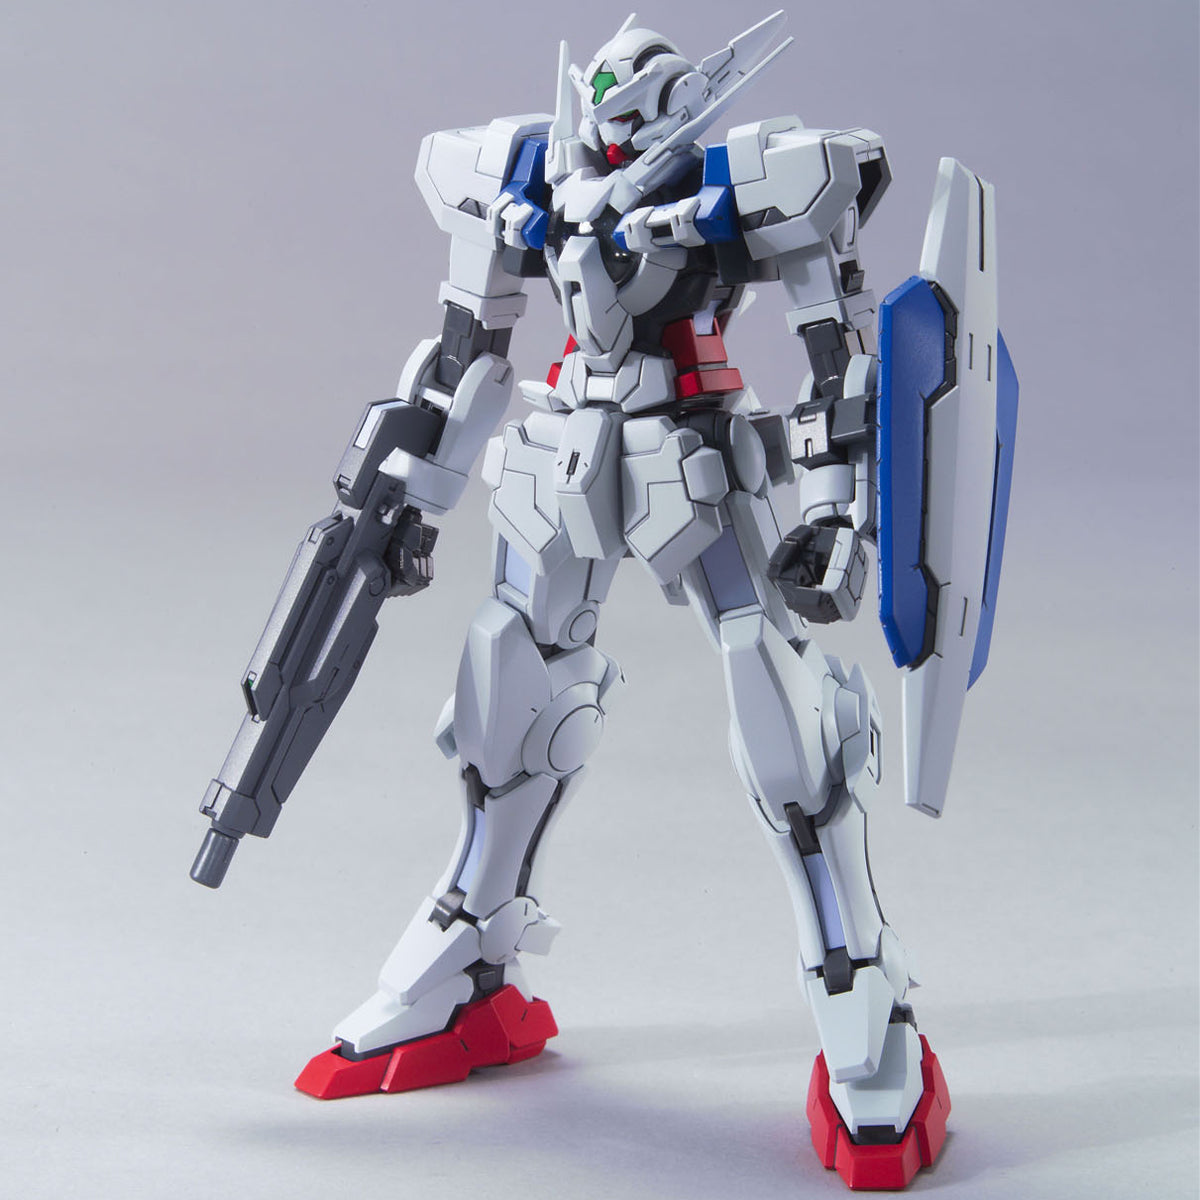 HG00 - GNY-001 Astraea Gundam